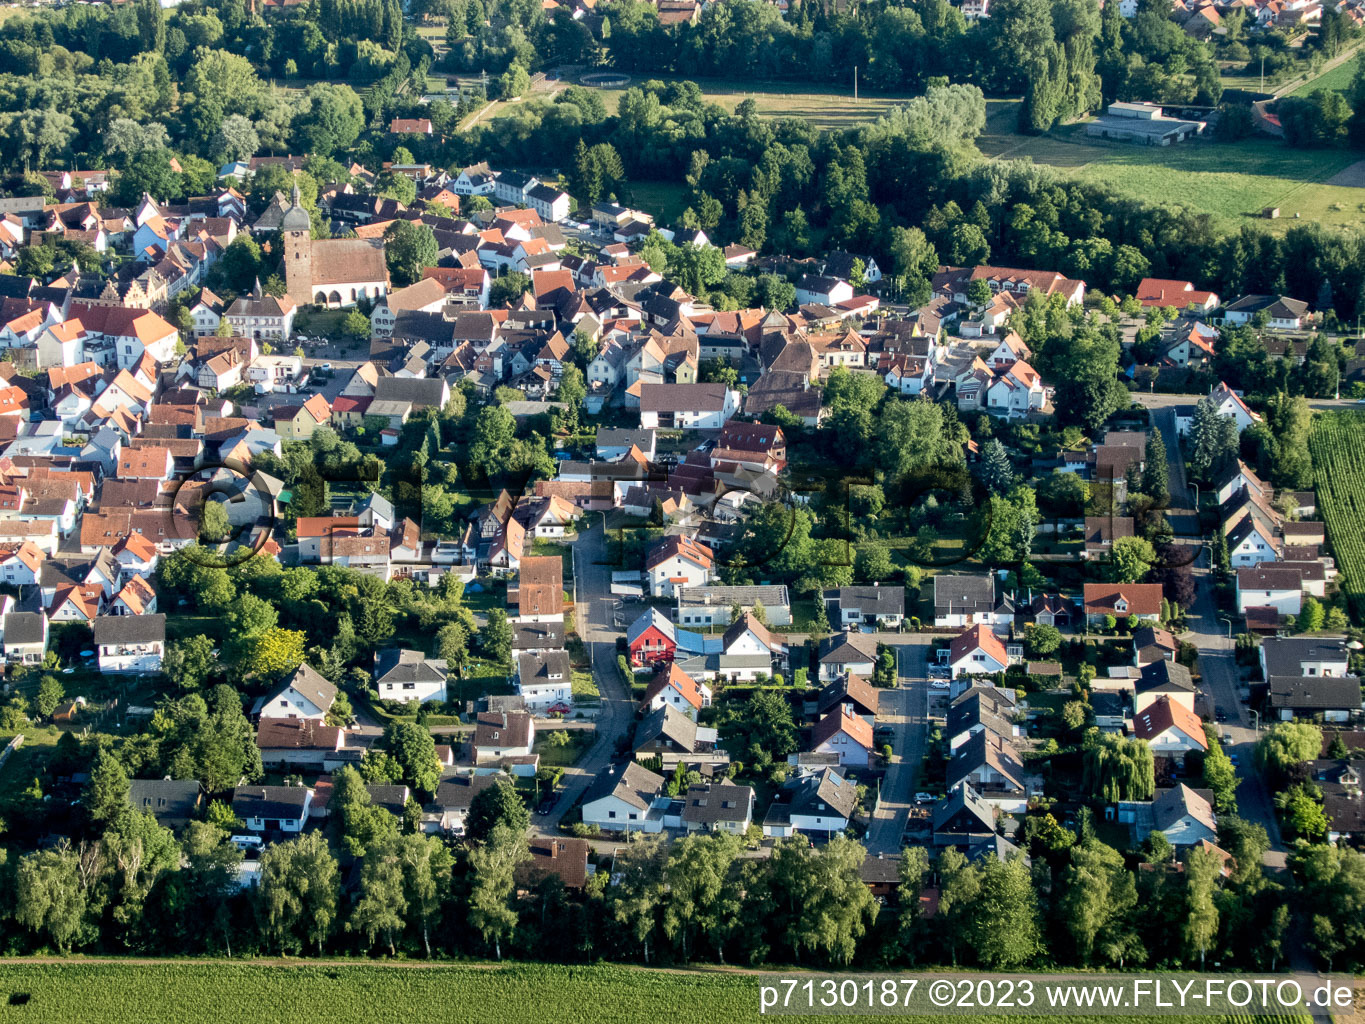 Drone image of District Billigheim in Billigheim-Ingenheim in the state Rhineland-Palatinate, Germany